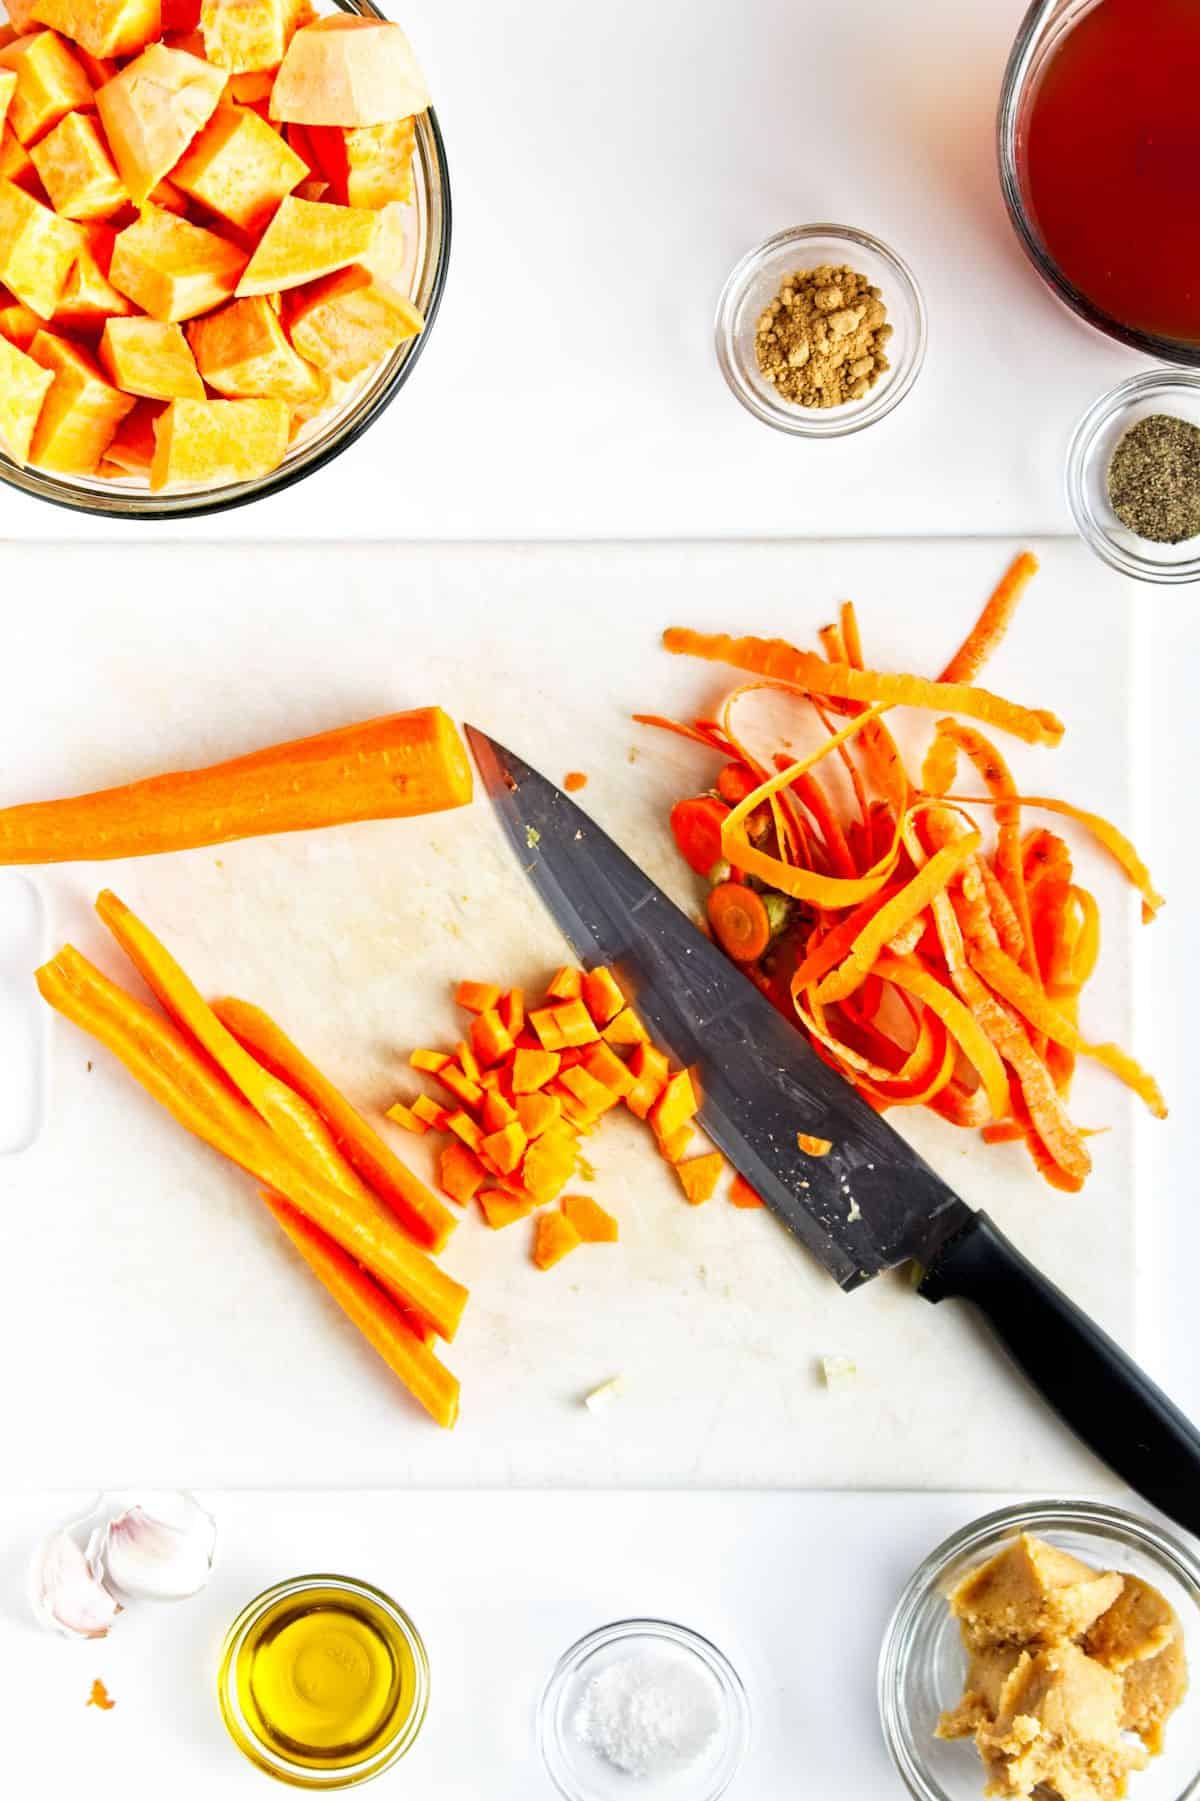 Chopping carrots.